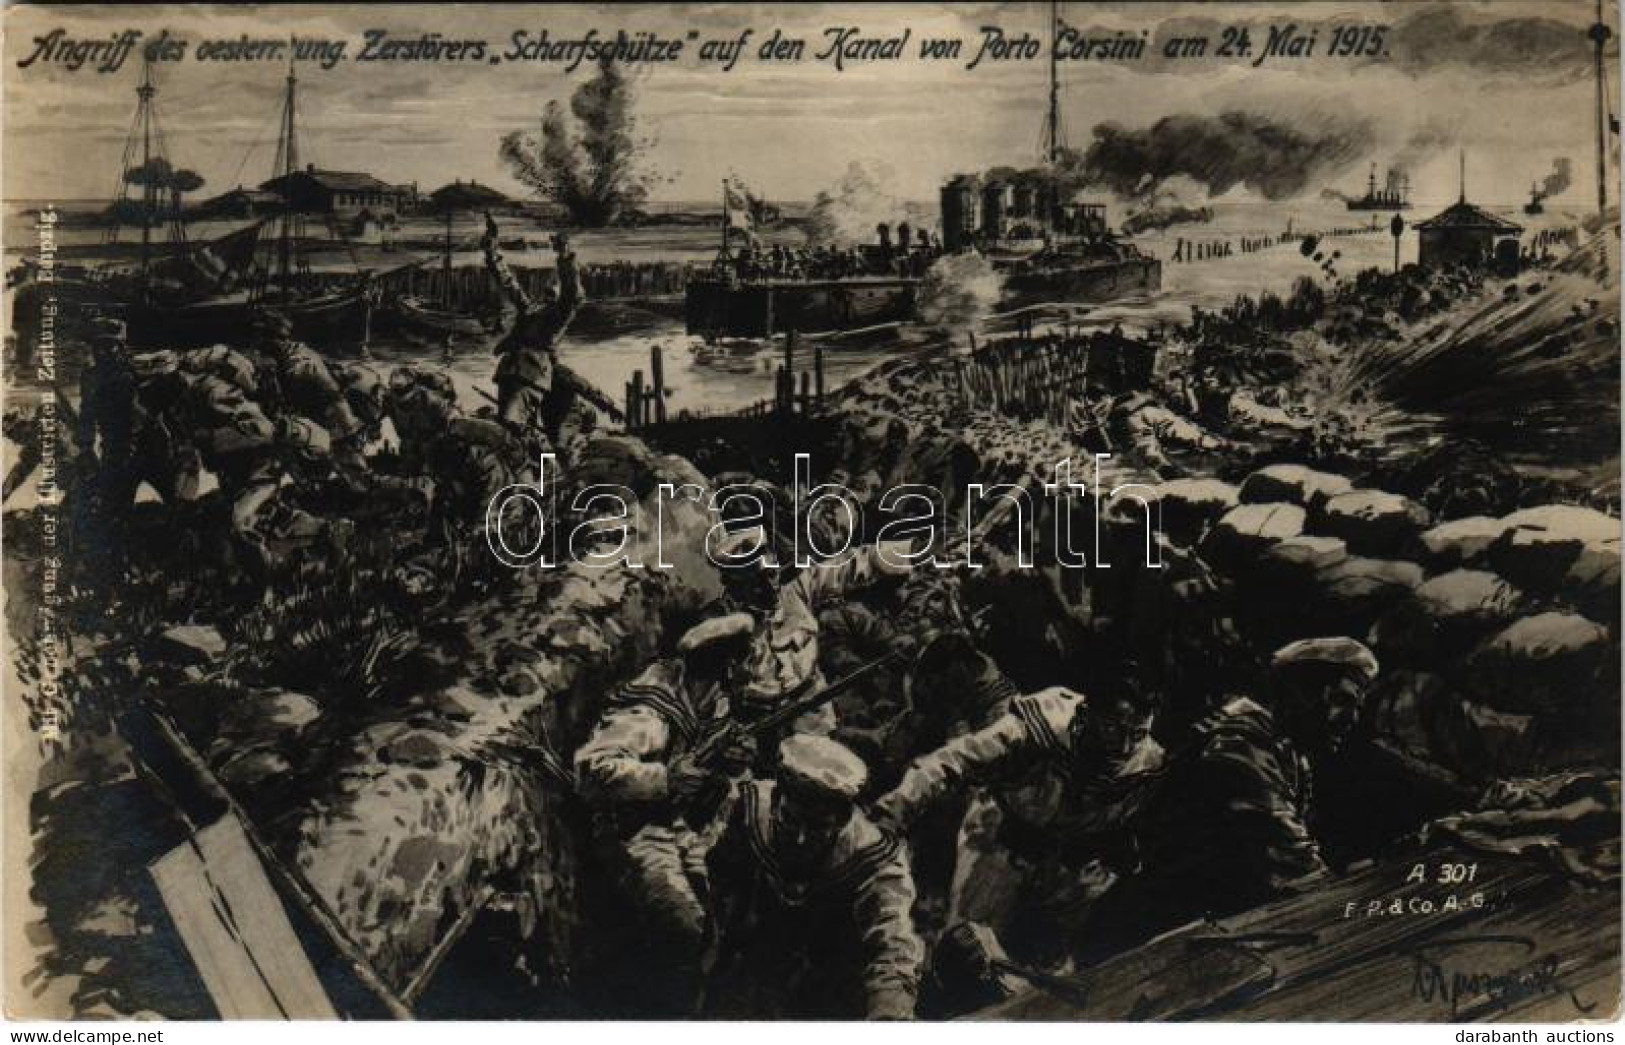 T2/T3 1915 Angriff Des Oesterr.-ung. Zerstörers "Scharfschütze" Auf Den Kanal Von Porto Corsini Am 24. Mai 1915. / SMS S - Non Classés